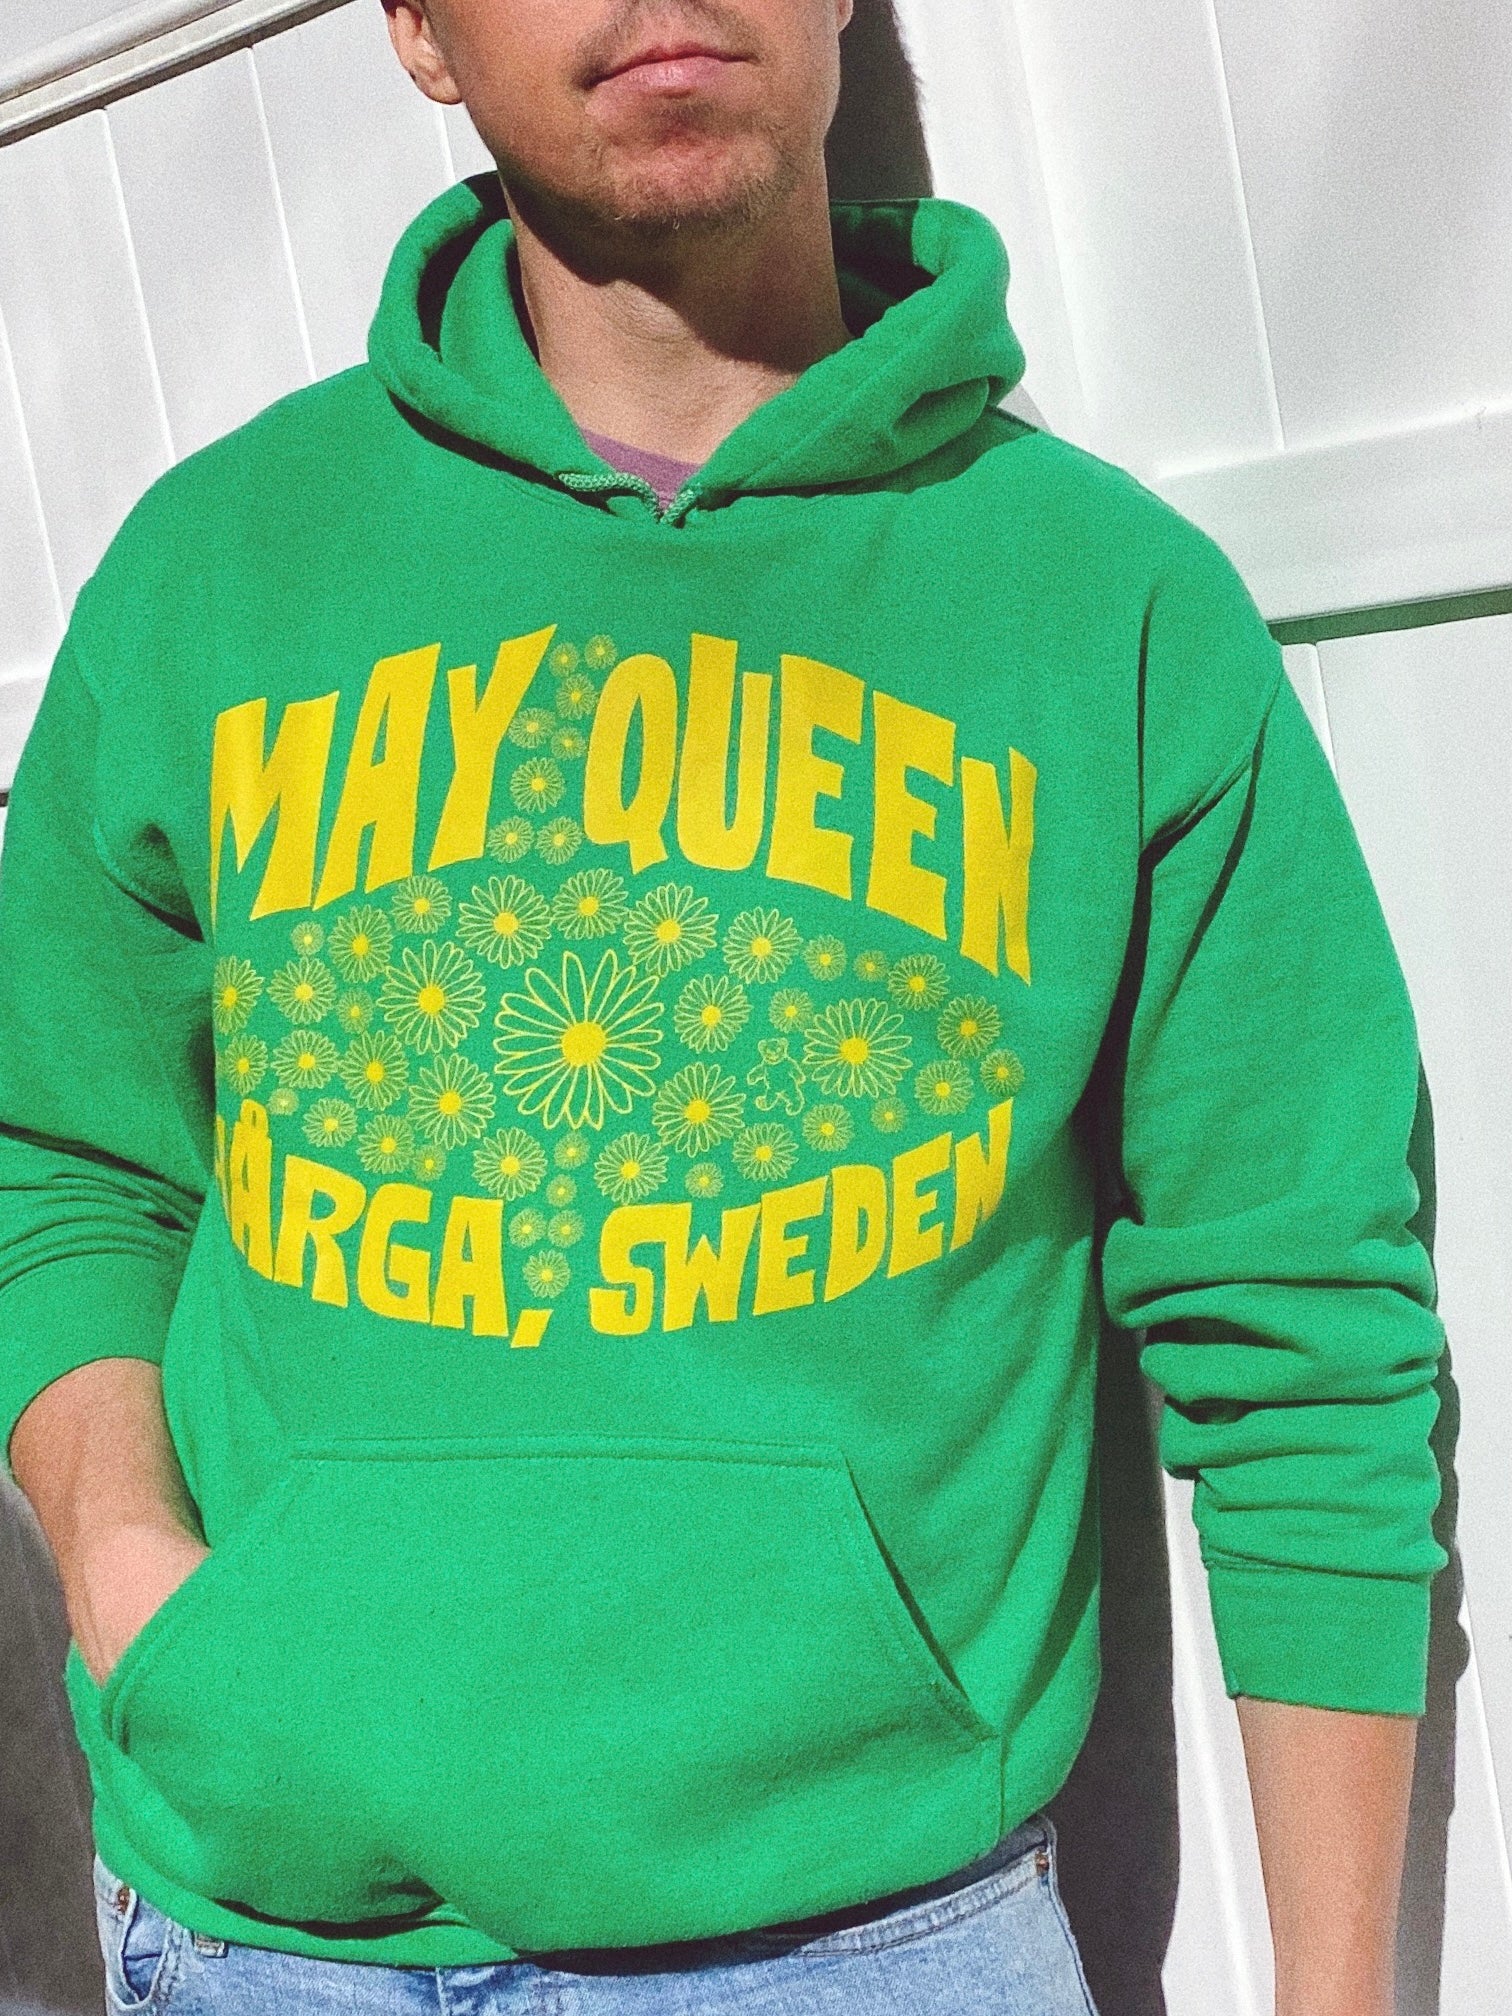 Midsommar May Queen Hoodie Sweatshirt - Totally Good Time